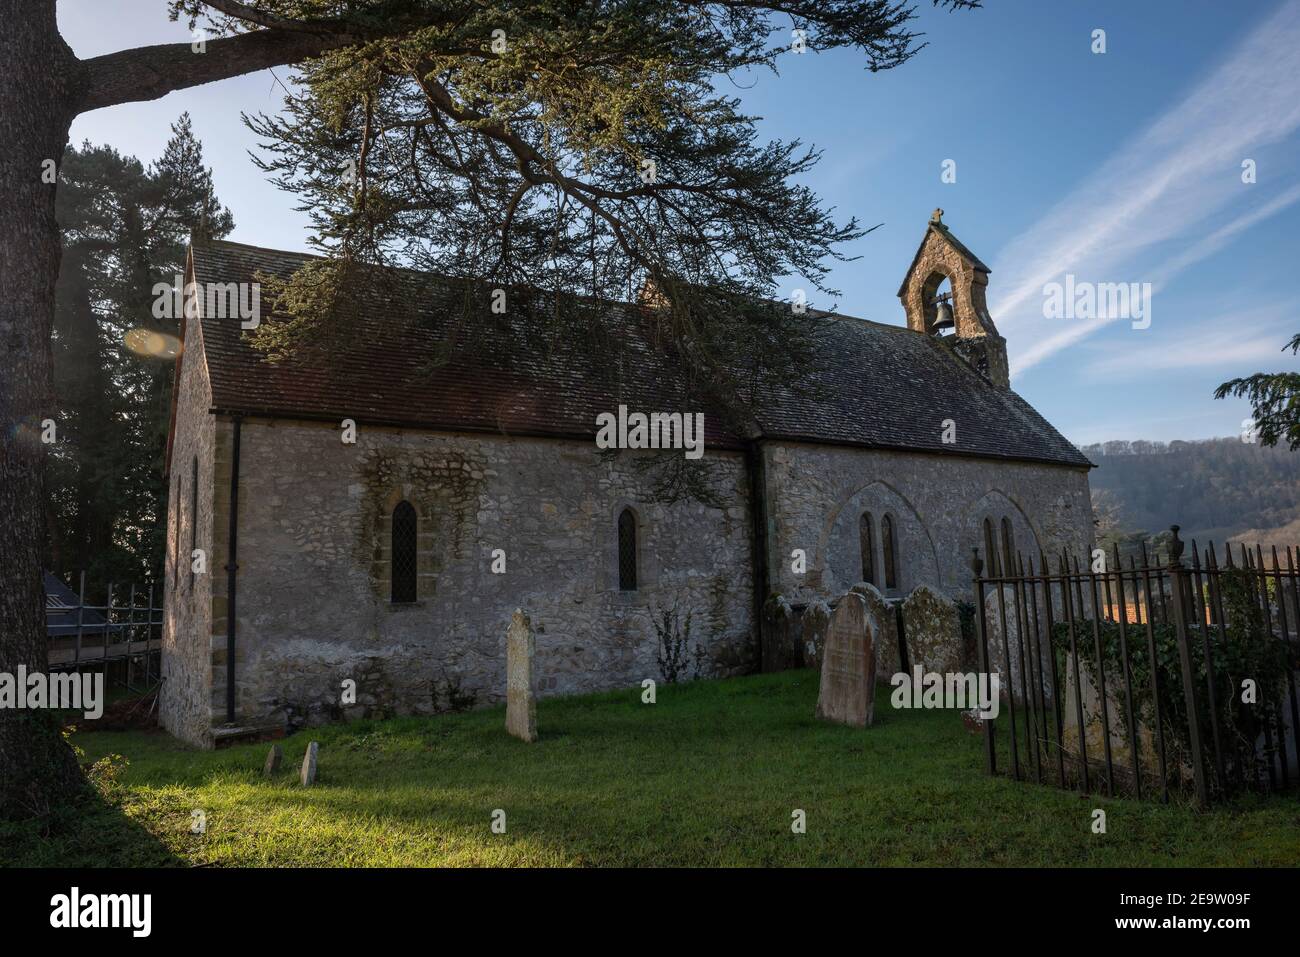 The 12th century downland church of St. Mary Barlavington near Petworth, West Sussex, UK Stock Photo